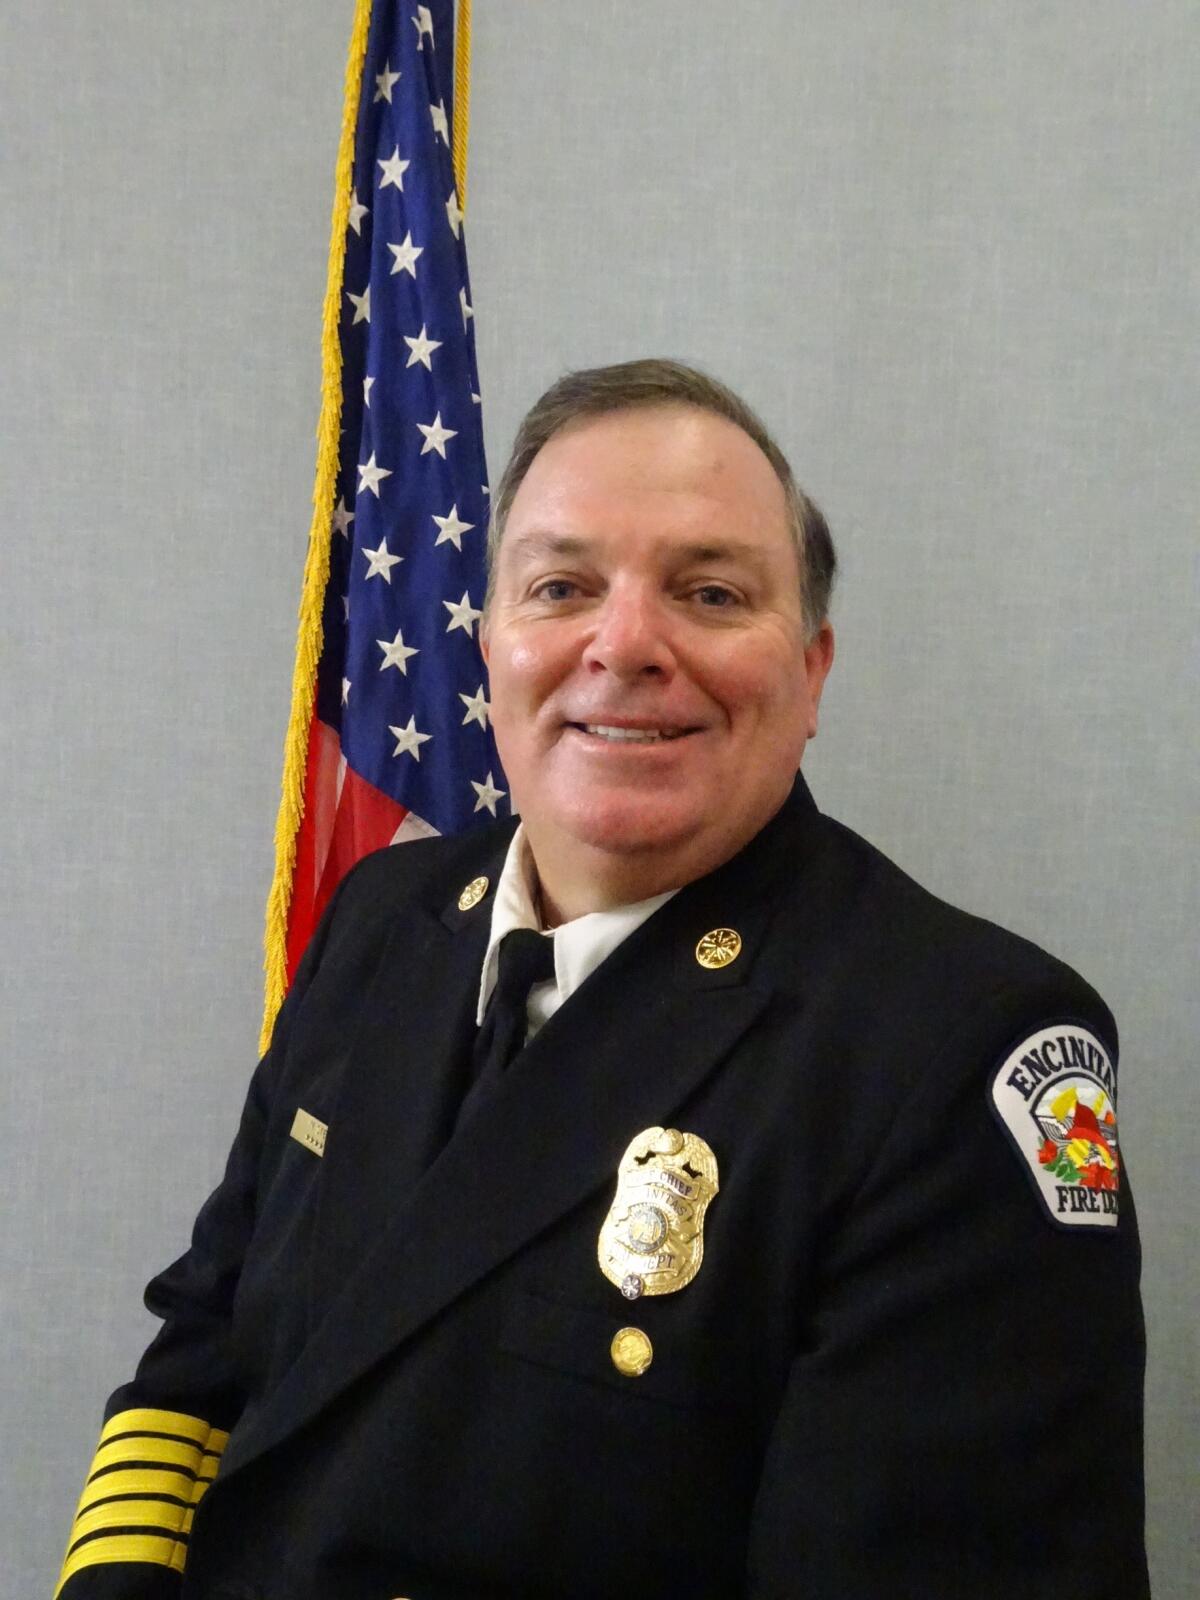 Encinitas Fire Chief Mike Stein